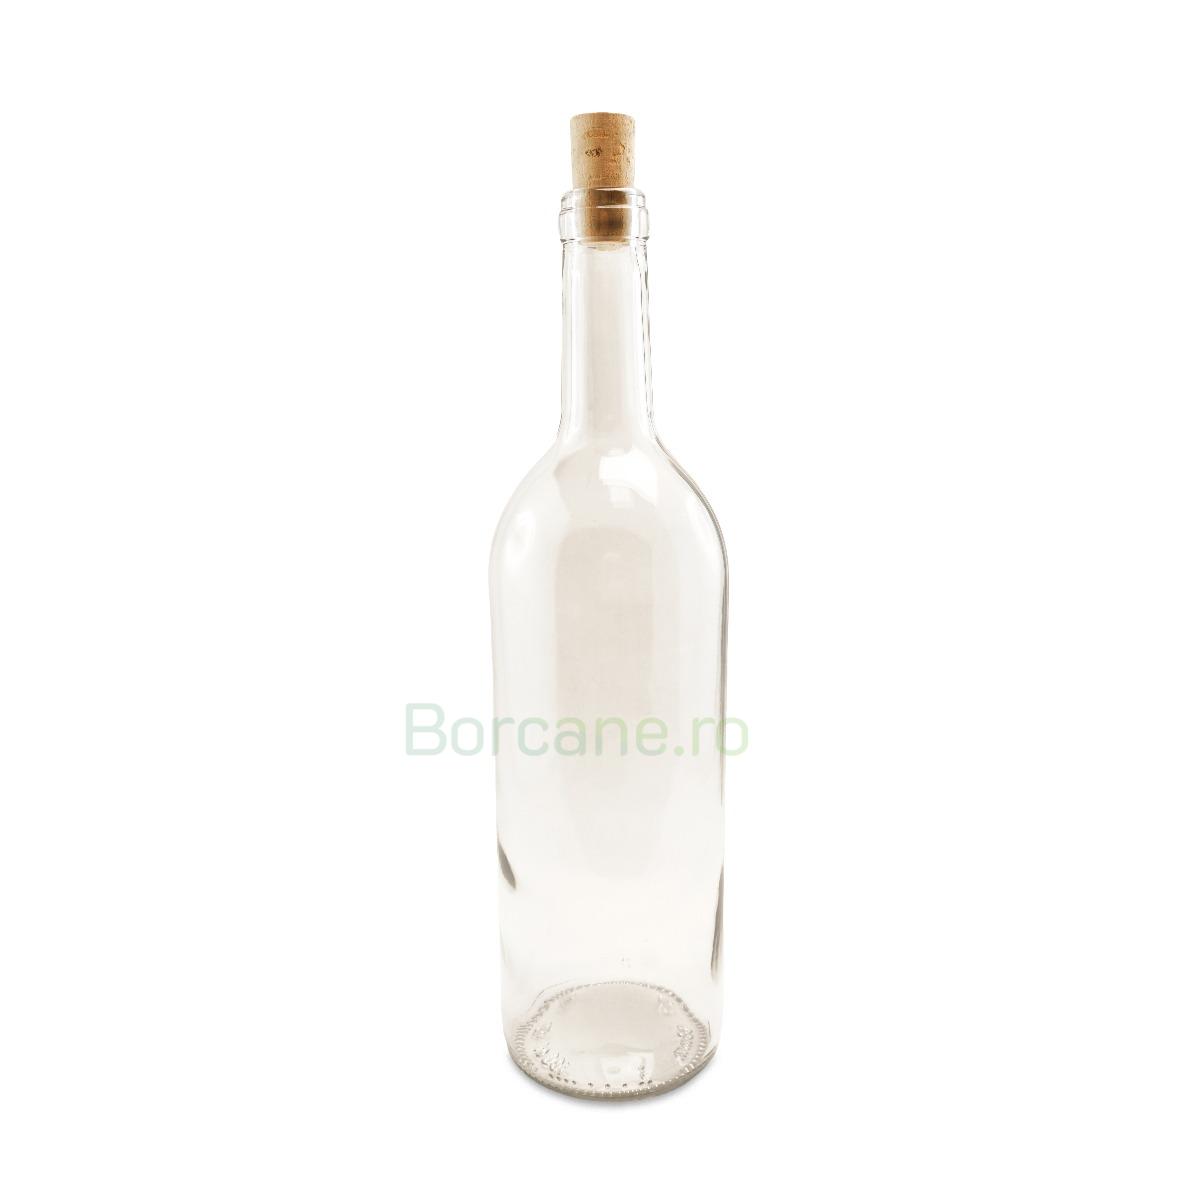 Easy Get up investment Sticla vin 1L transparenta Vin Borcane.ro